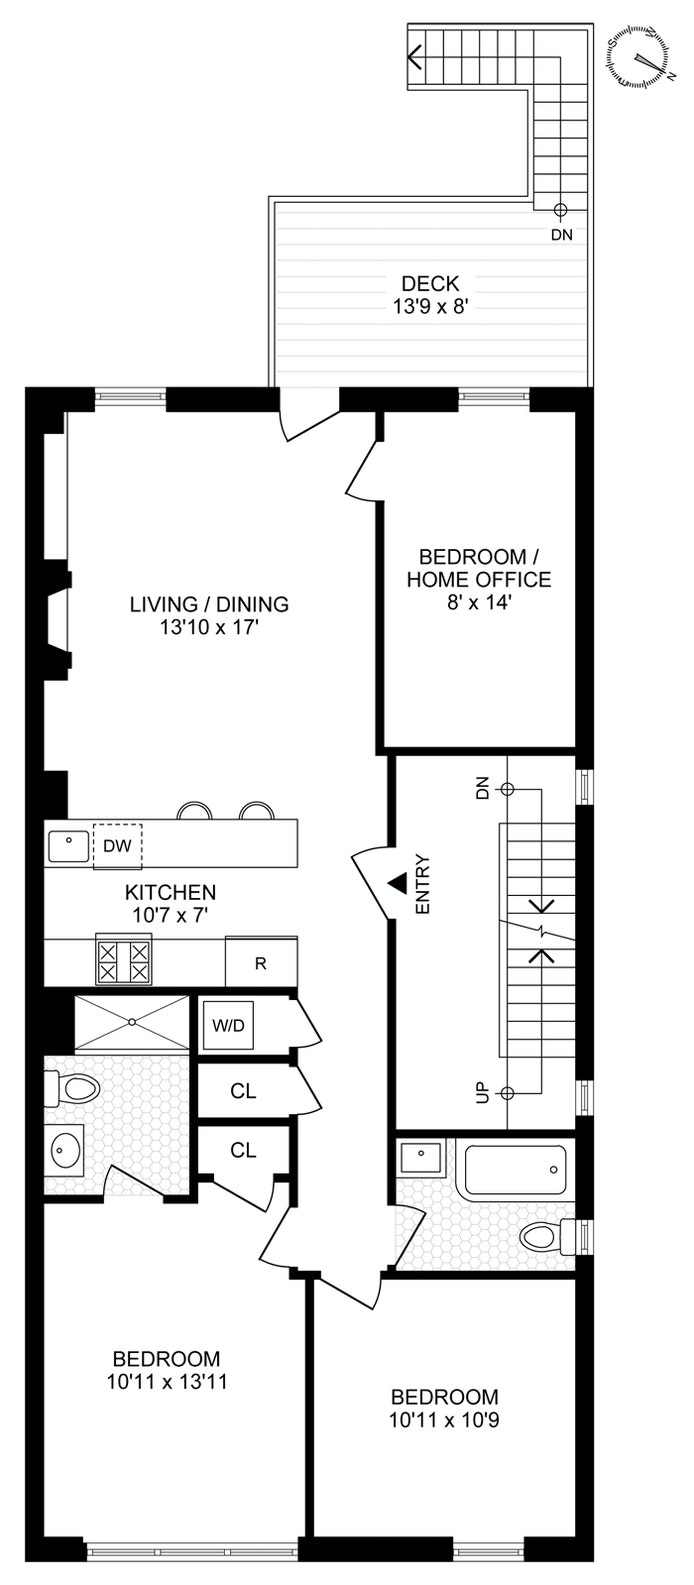 Floorplan for 388 Clinton Avenue, 1